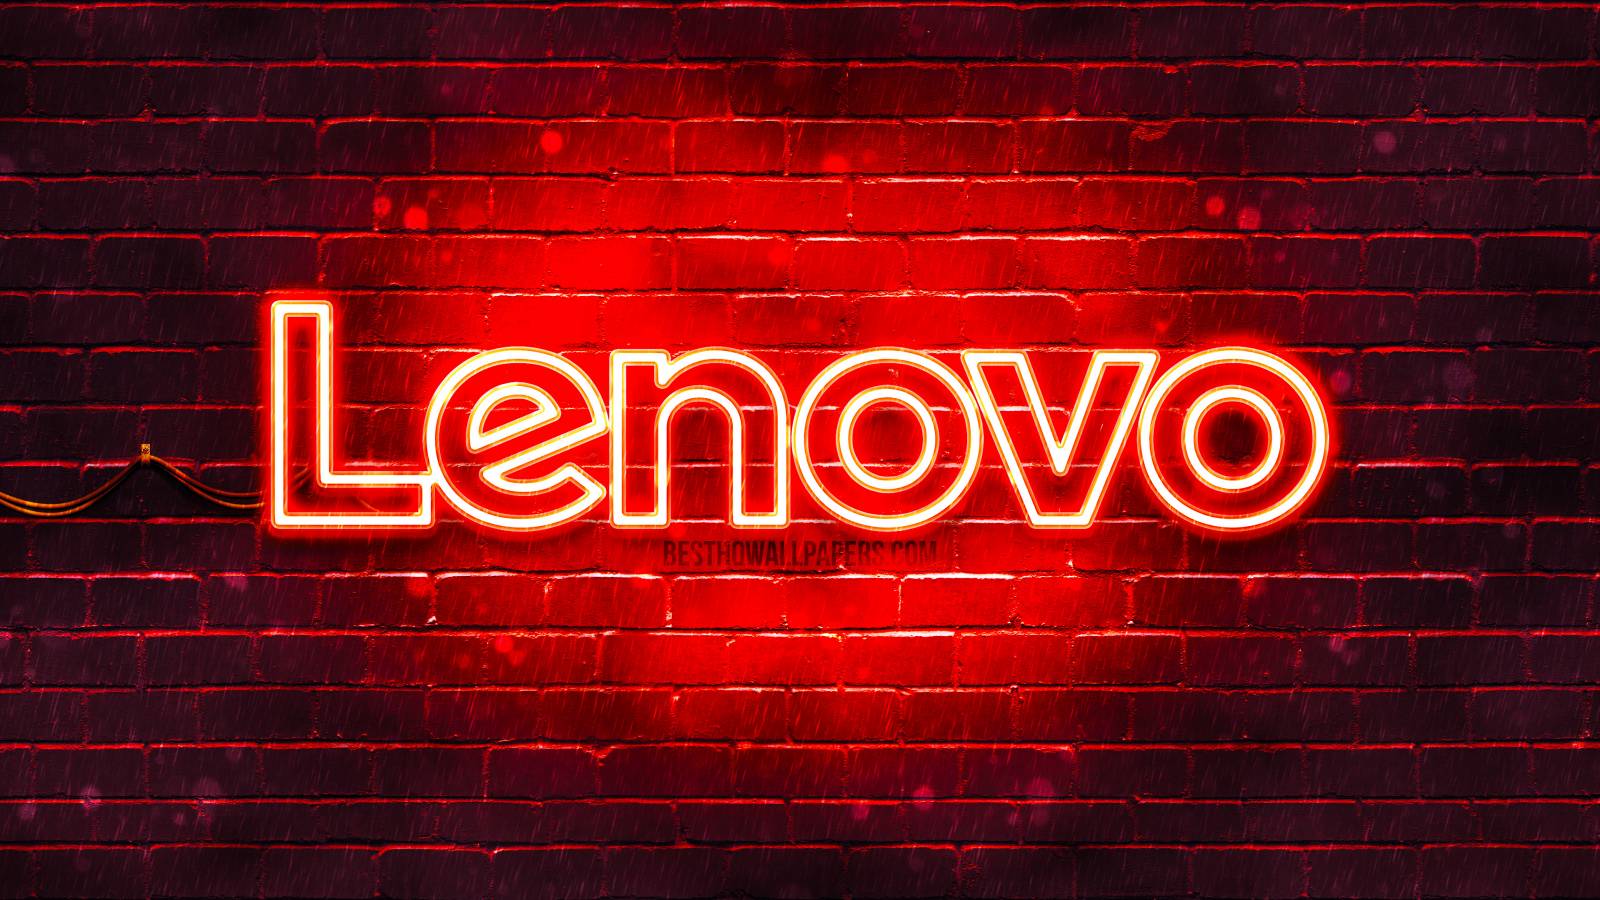 Lenovo neue Produkte Rumänien